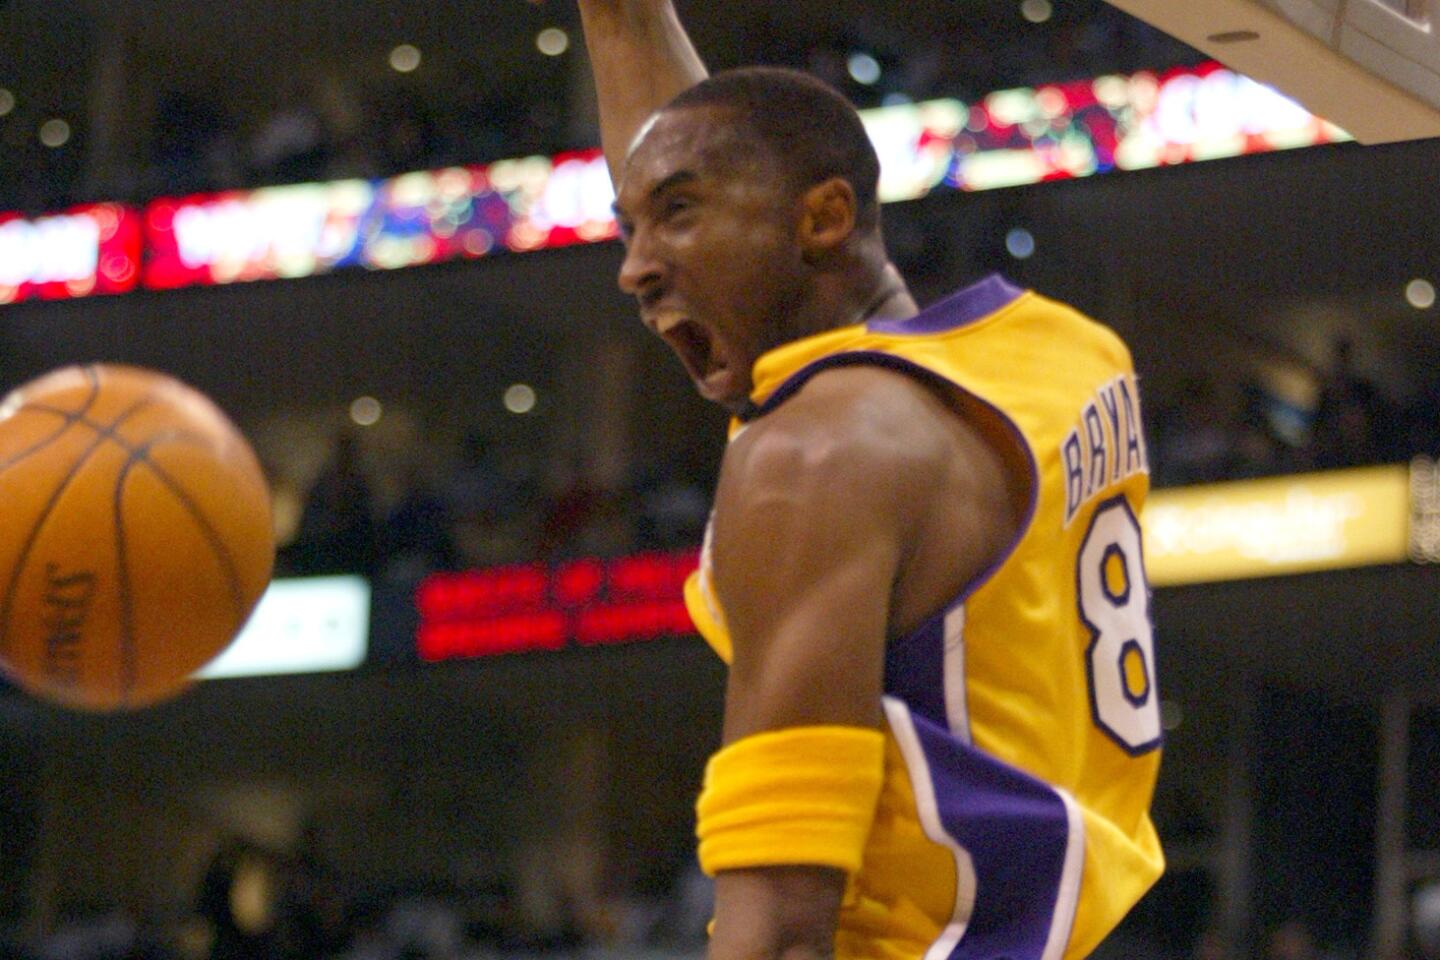 NBA Deutschland - LOS ANGELES - DECEMBER 20: Kobe Bryant #8 of the